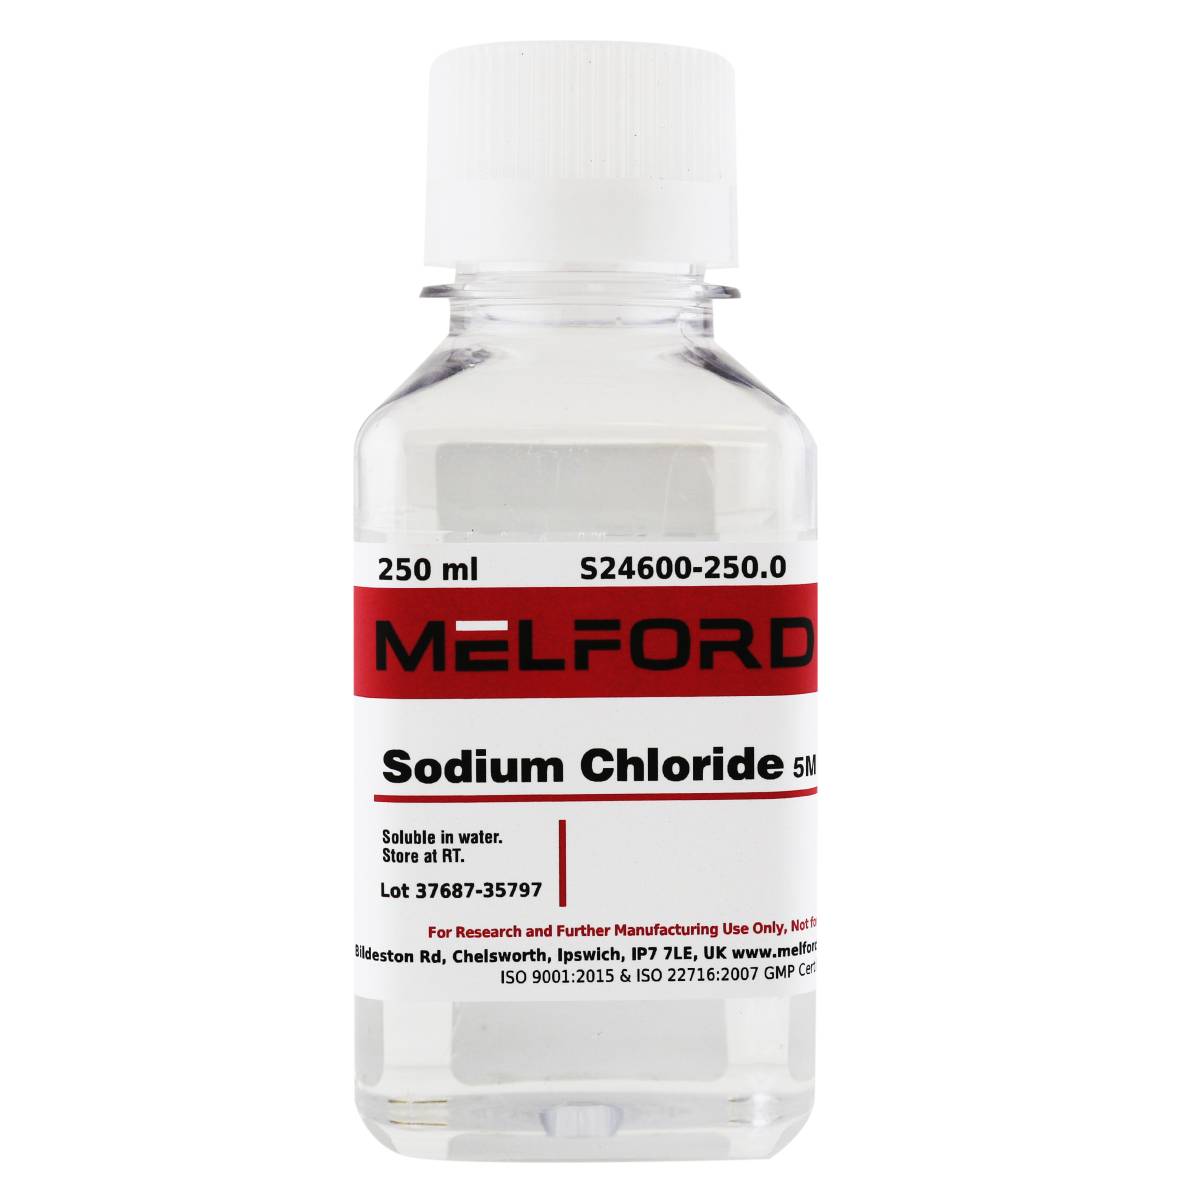 Sodium Chloride 5M Solution, 250 Milliliters